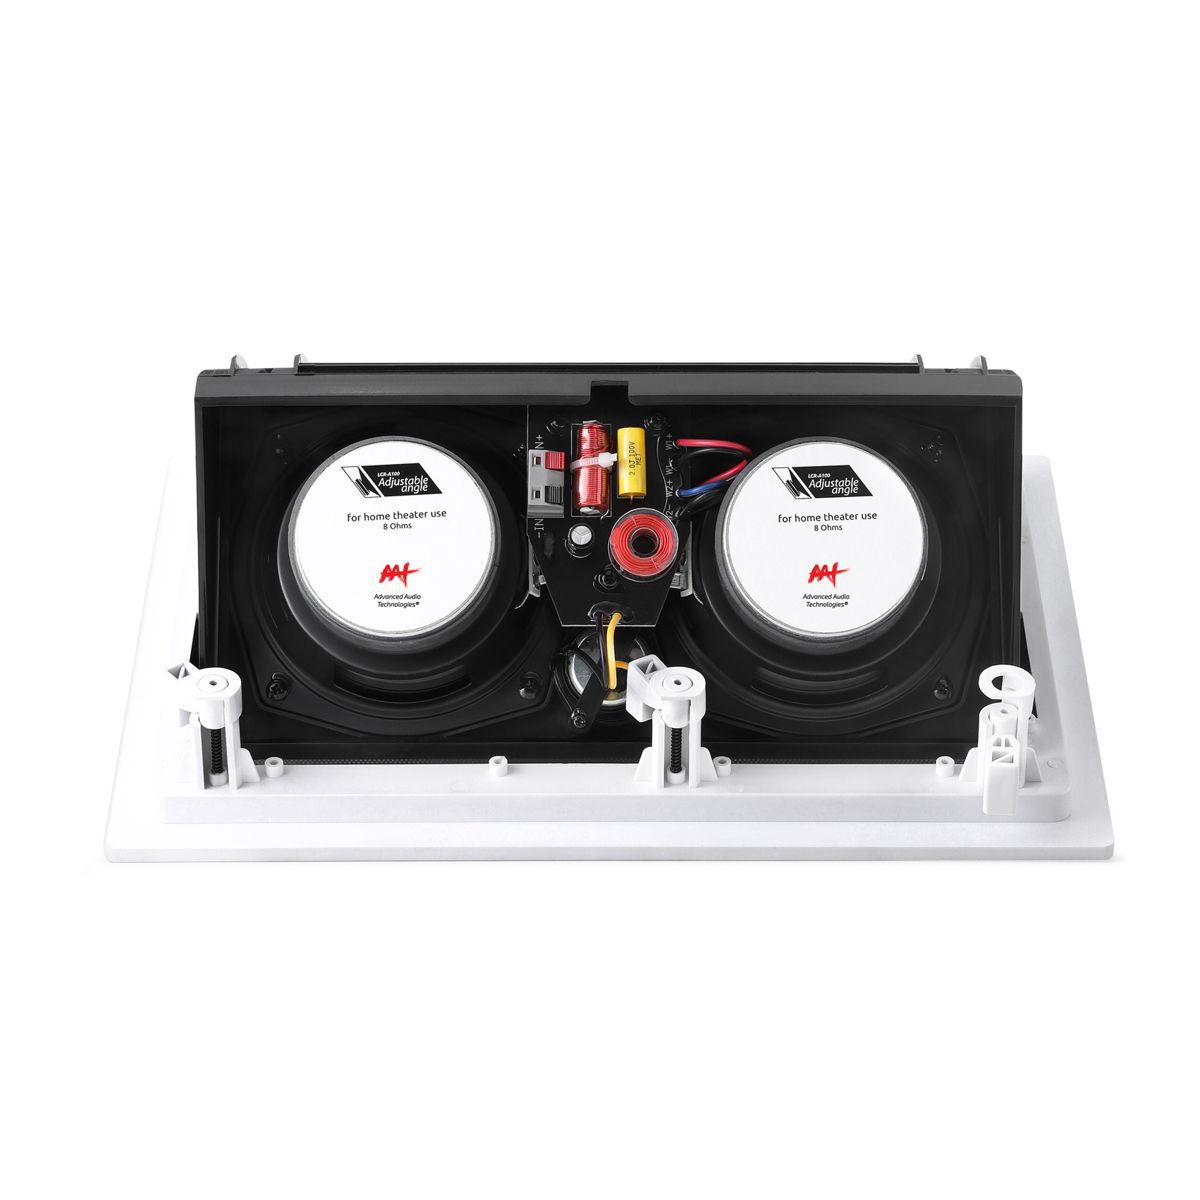 Kit 5.1.2 Dolby Atmos Caixa Acústica de Embutir LCR-A100 + LR-E100 + NQ6-M100 + Subwoofer Compact Cube 10 AAT